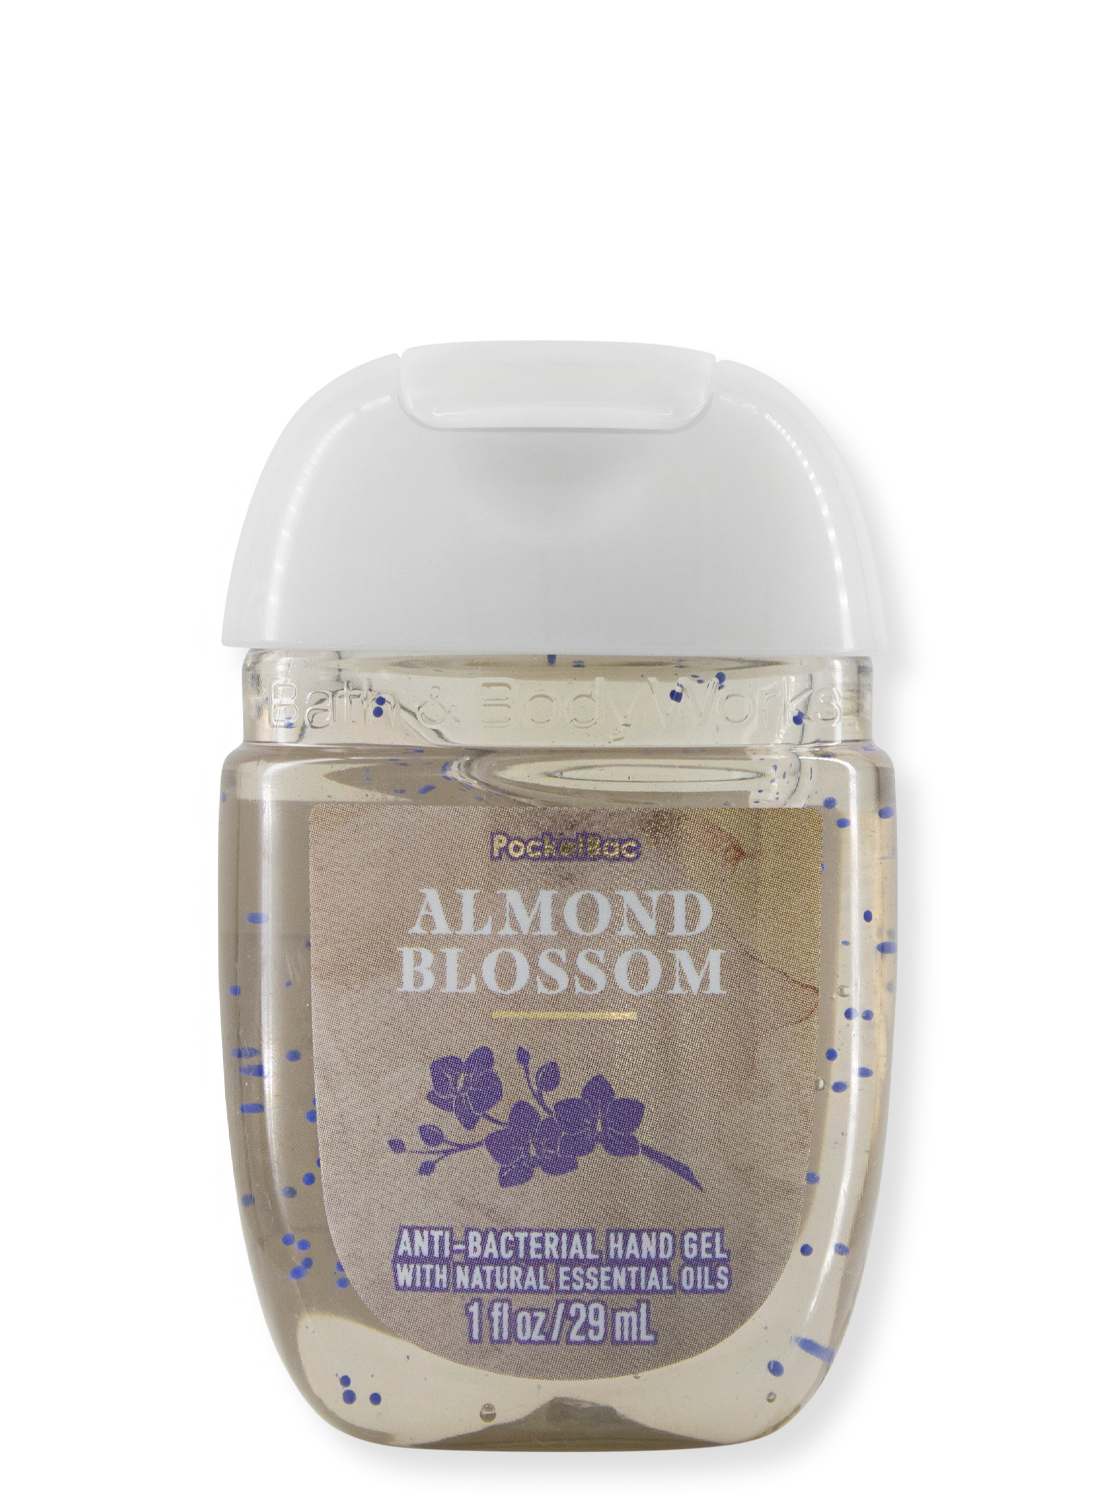 Hand-Desinfektionsgel - Almond Blossom - 29ml